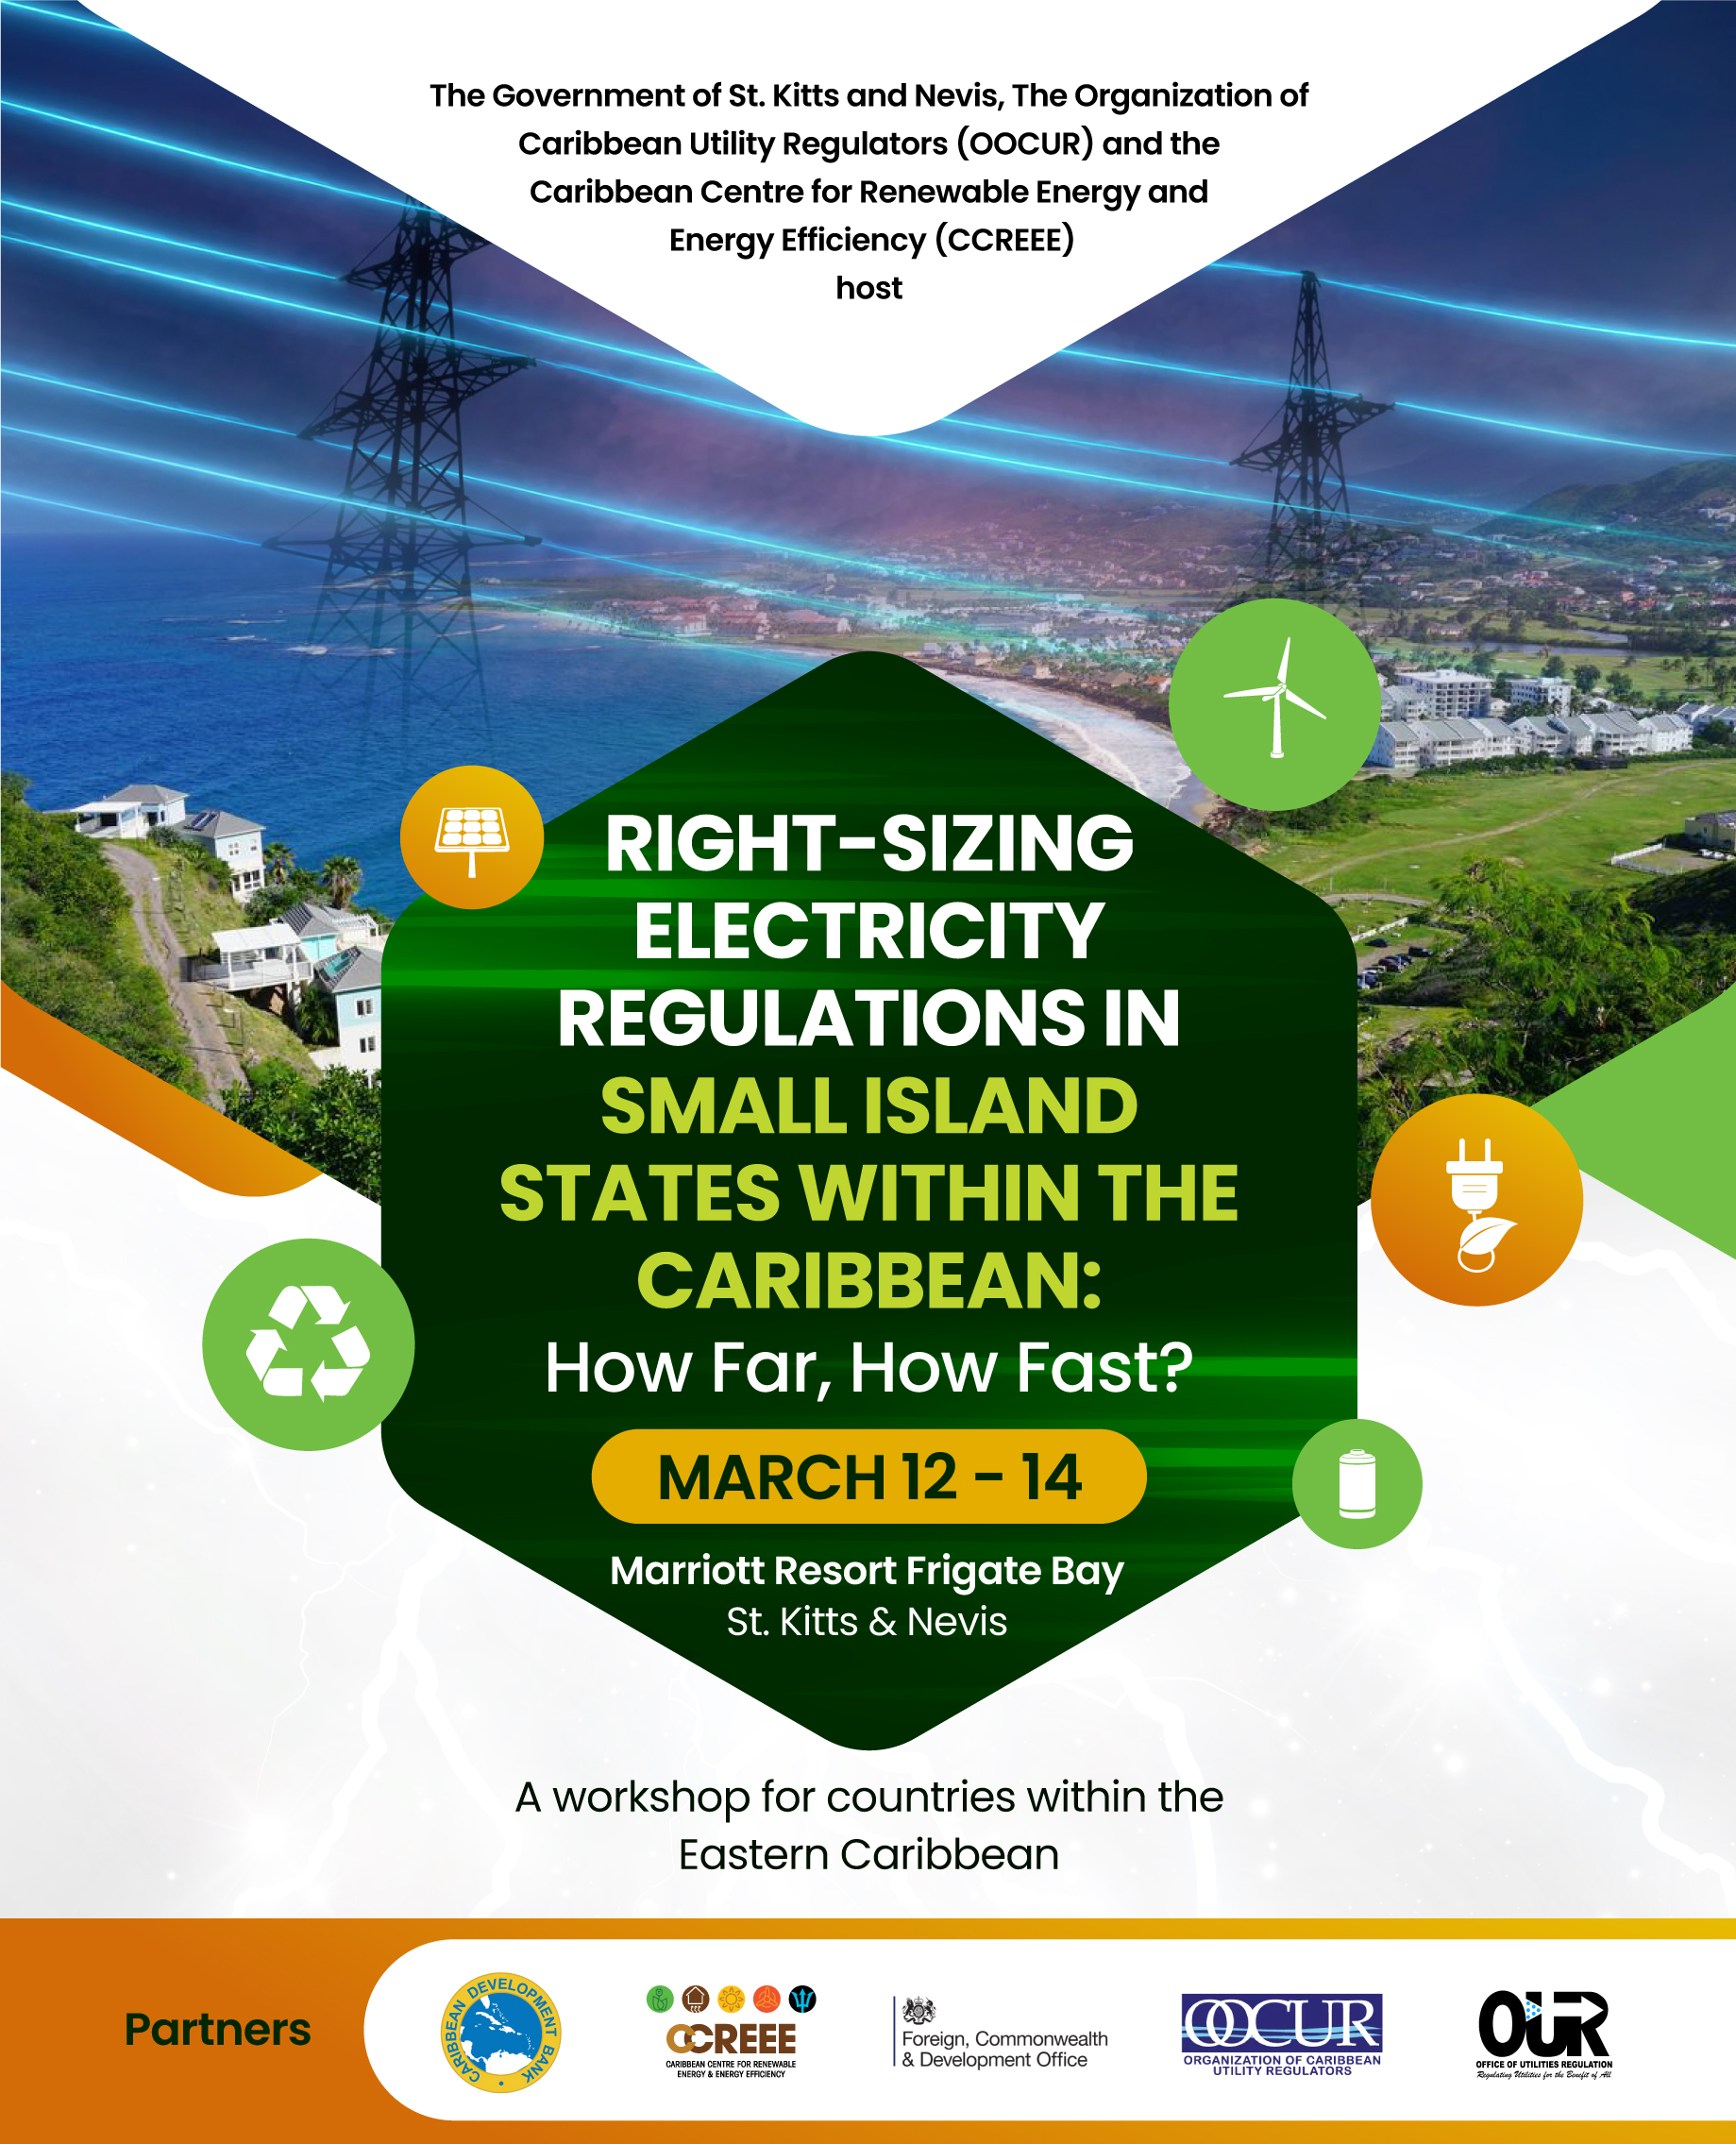 St. Kitts & Nevis Government Hosts Regional Electricity Regulations Workshop